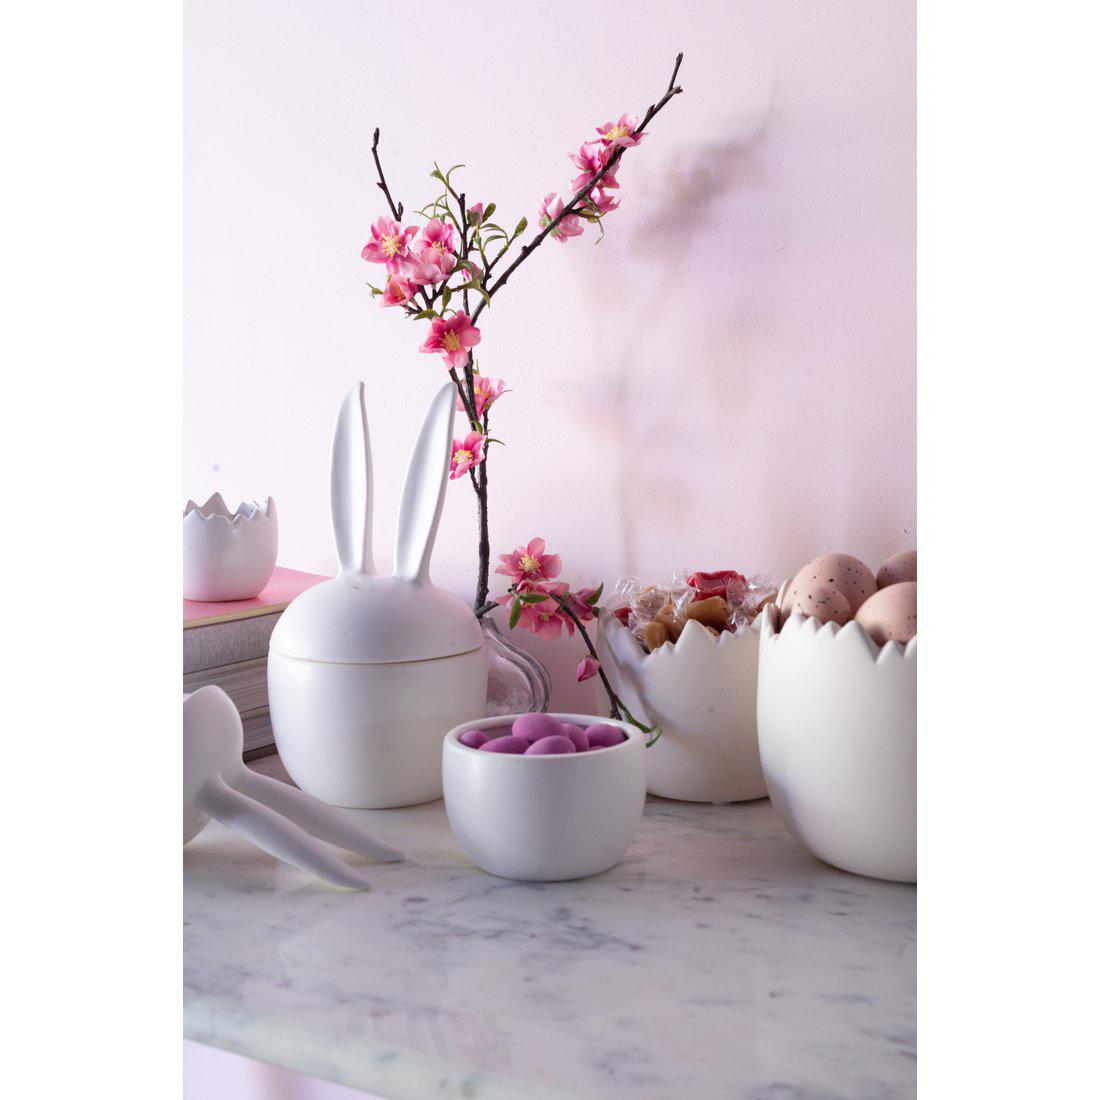 Hintsdeco bowl decorative Easter bowl with elaria rabbit porcelain 9x18 cm hintsdeco collection